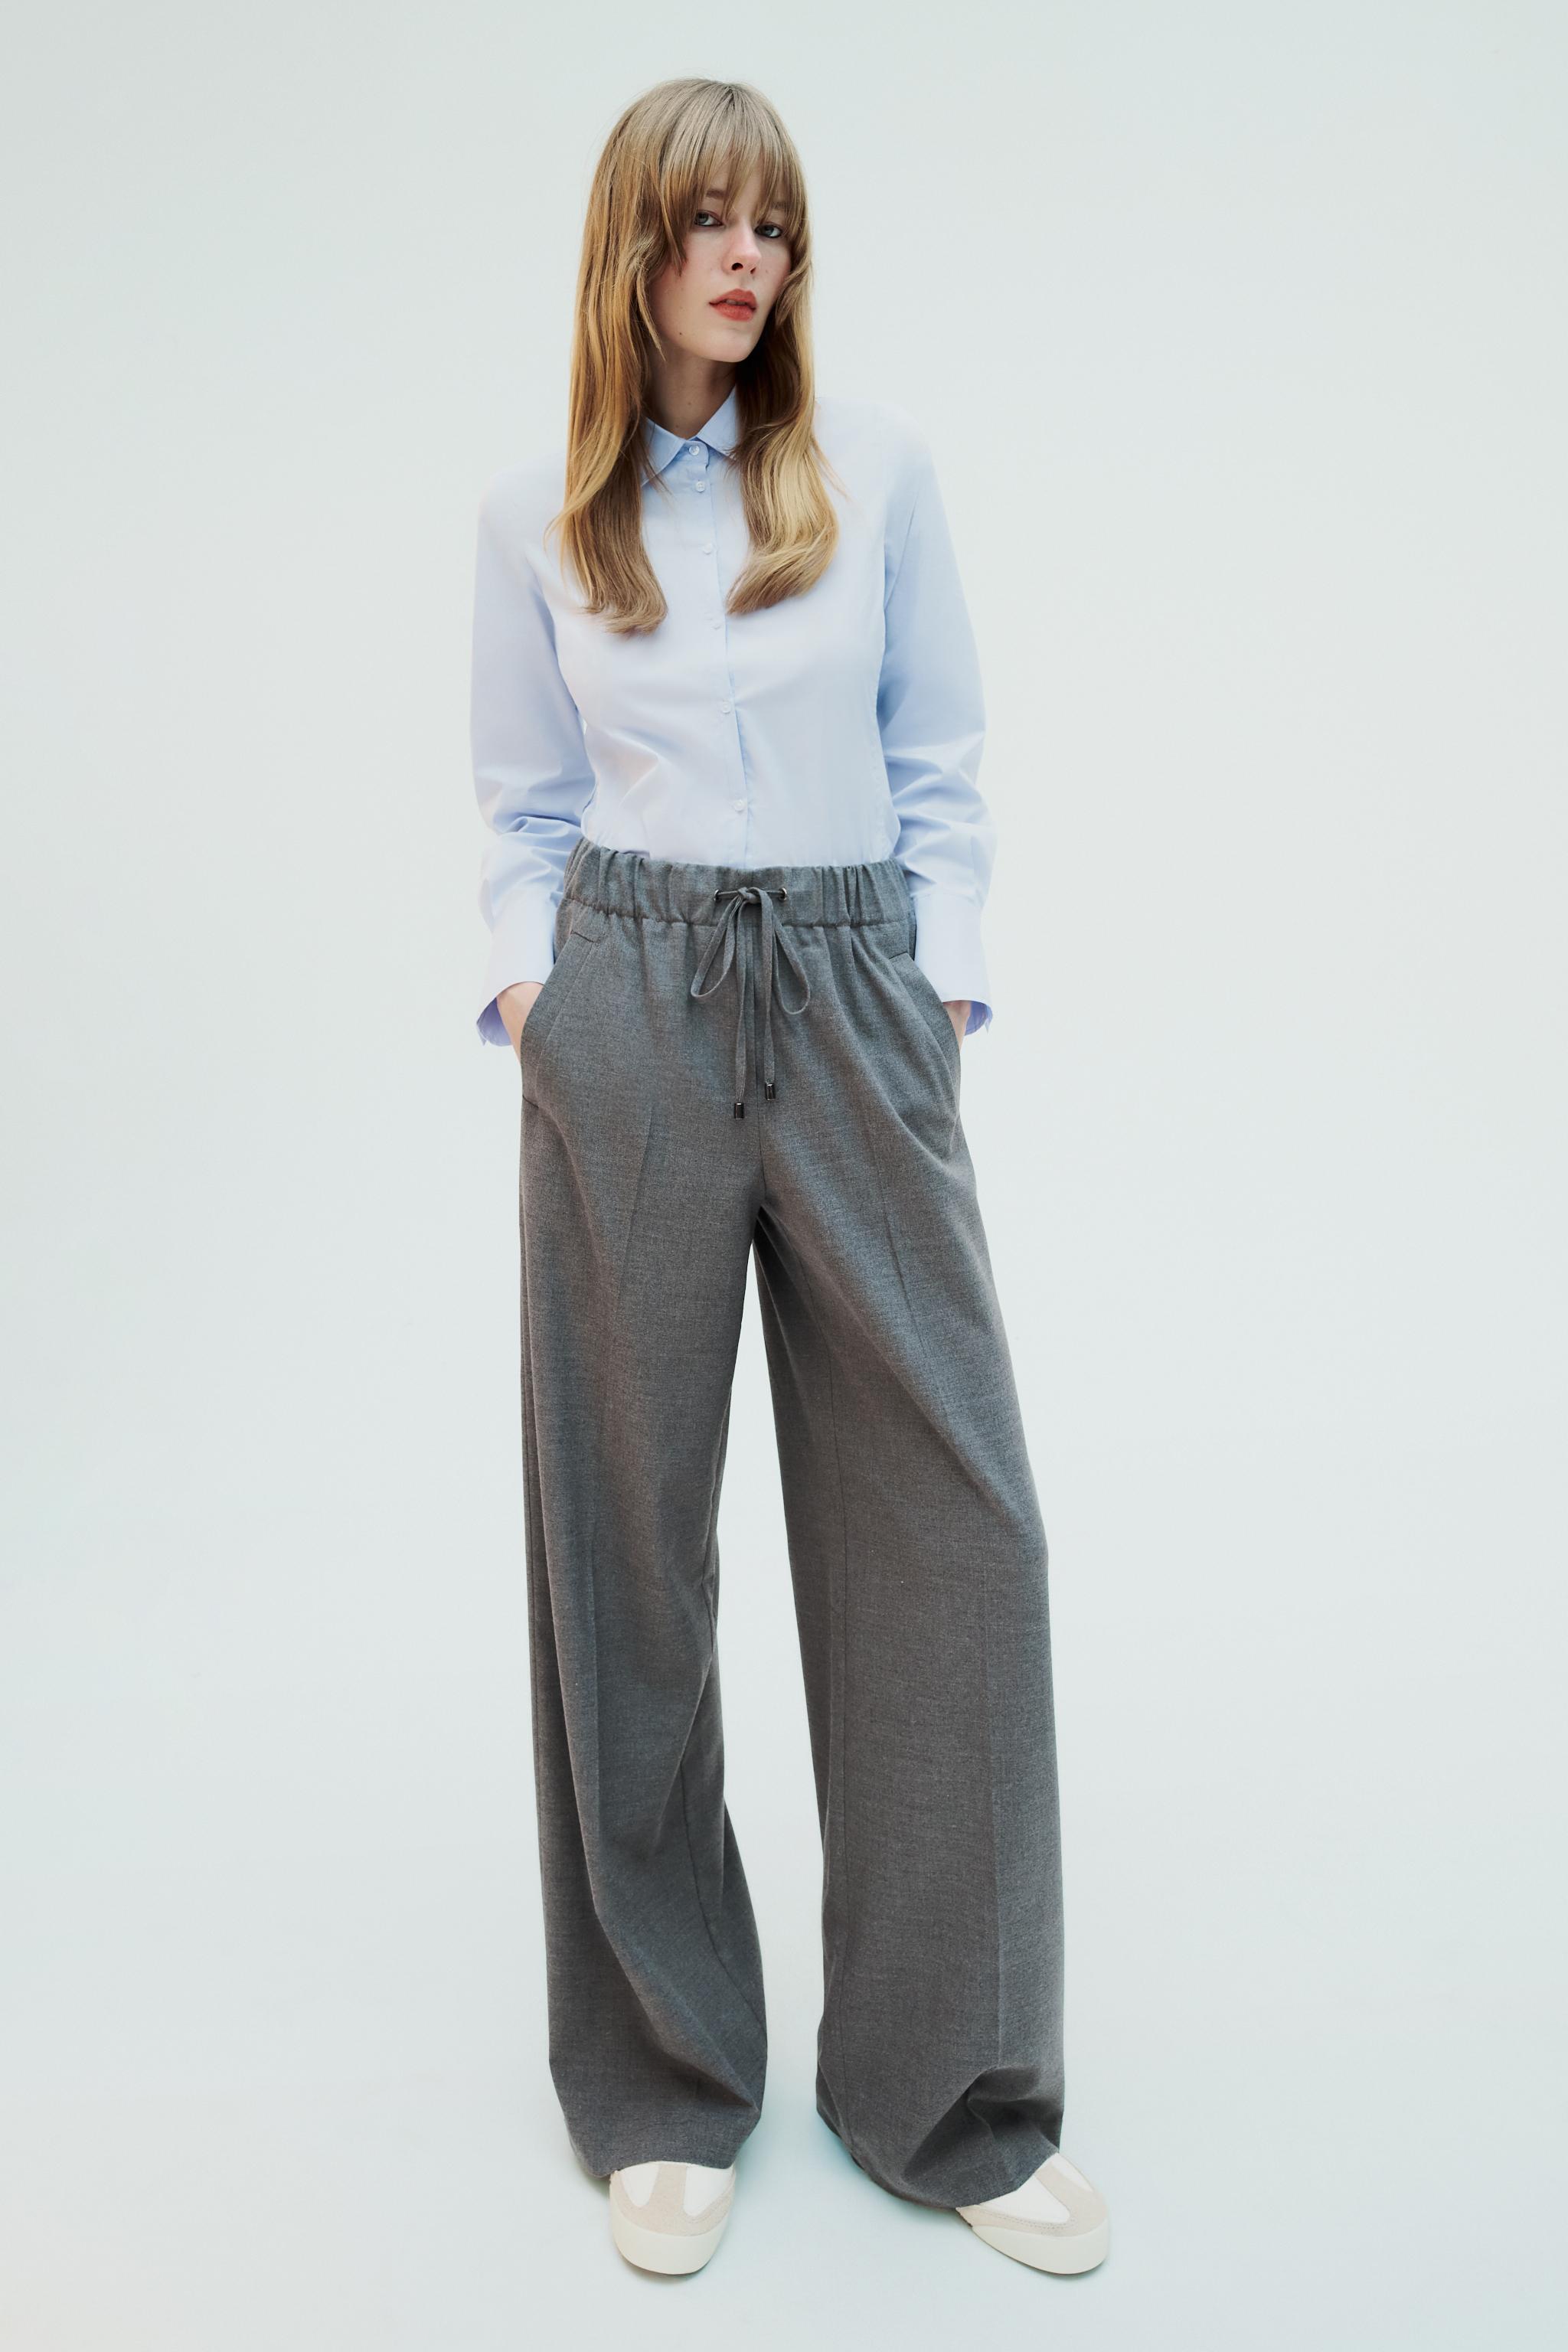 Zara Paisley Printed Flared Pants Size XS or M